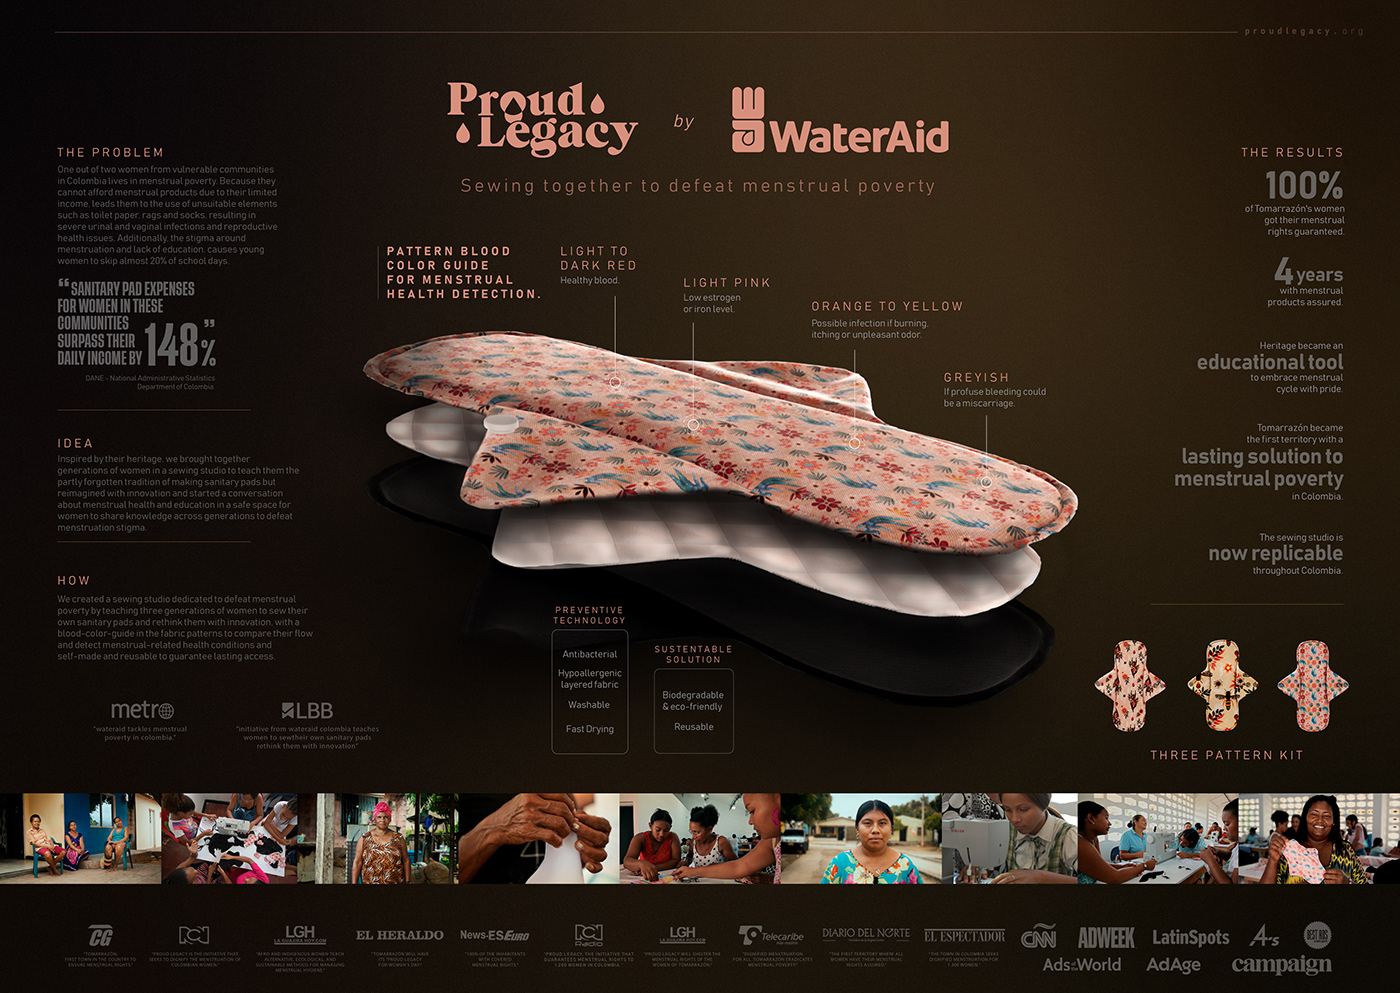 wateraid vmly&r higiene reutilizable ilustration mujer PERIODO DE ORGULLO PROUD LEGACY Clio Awards Cannes lions